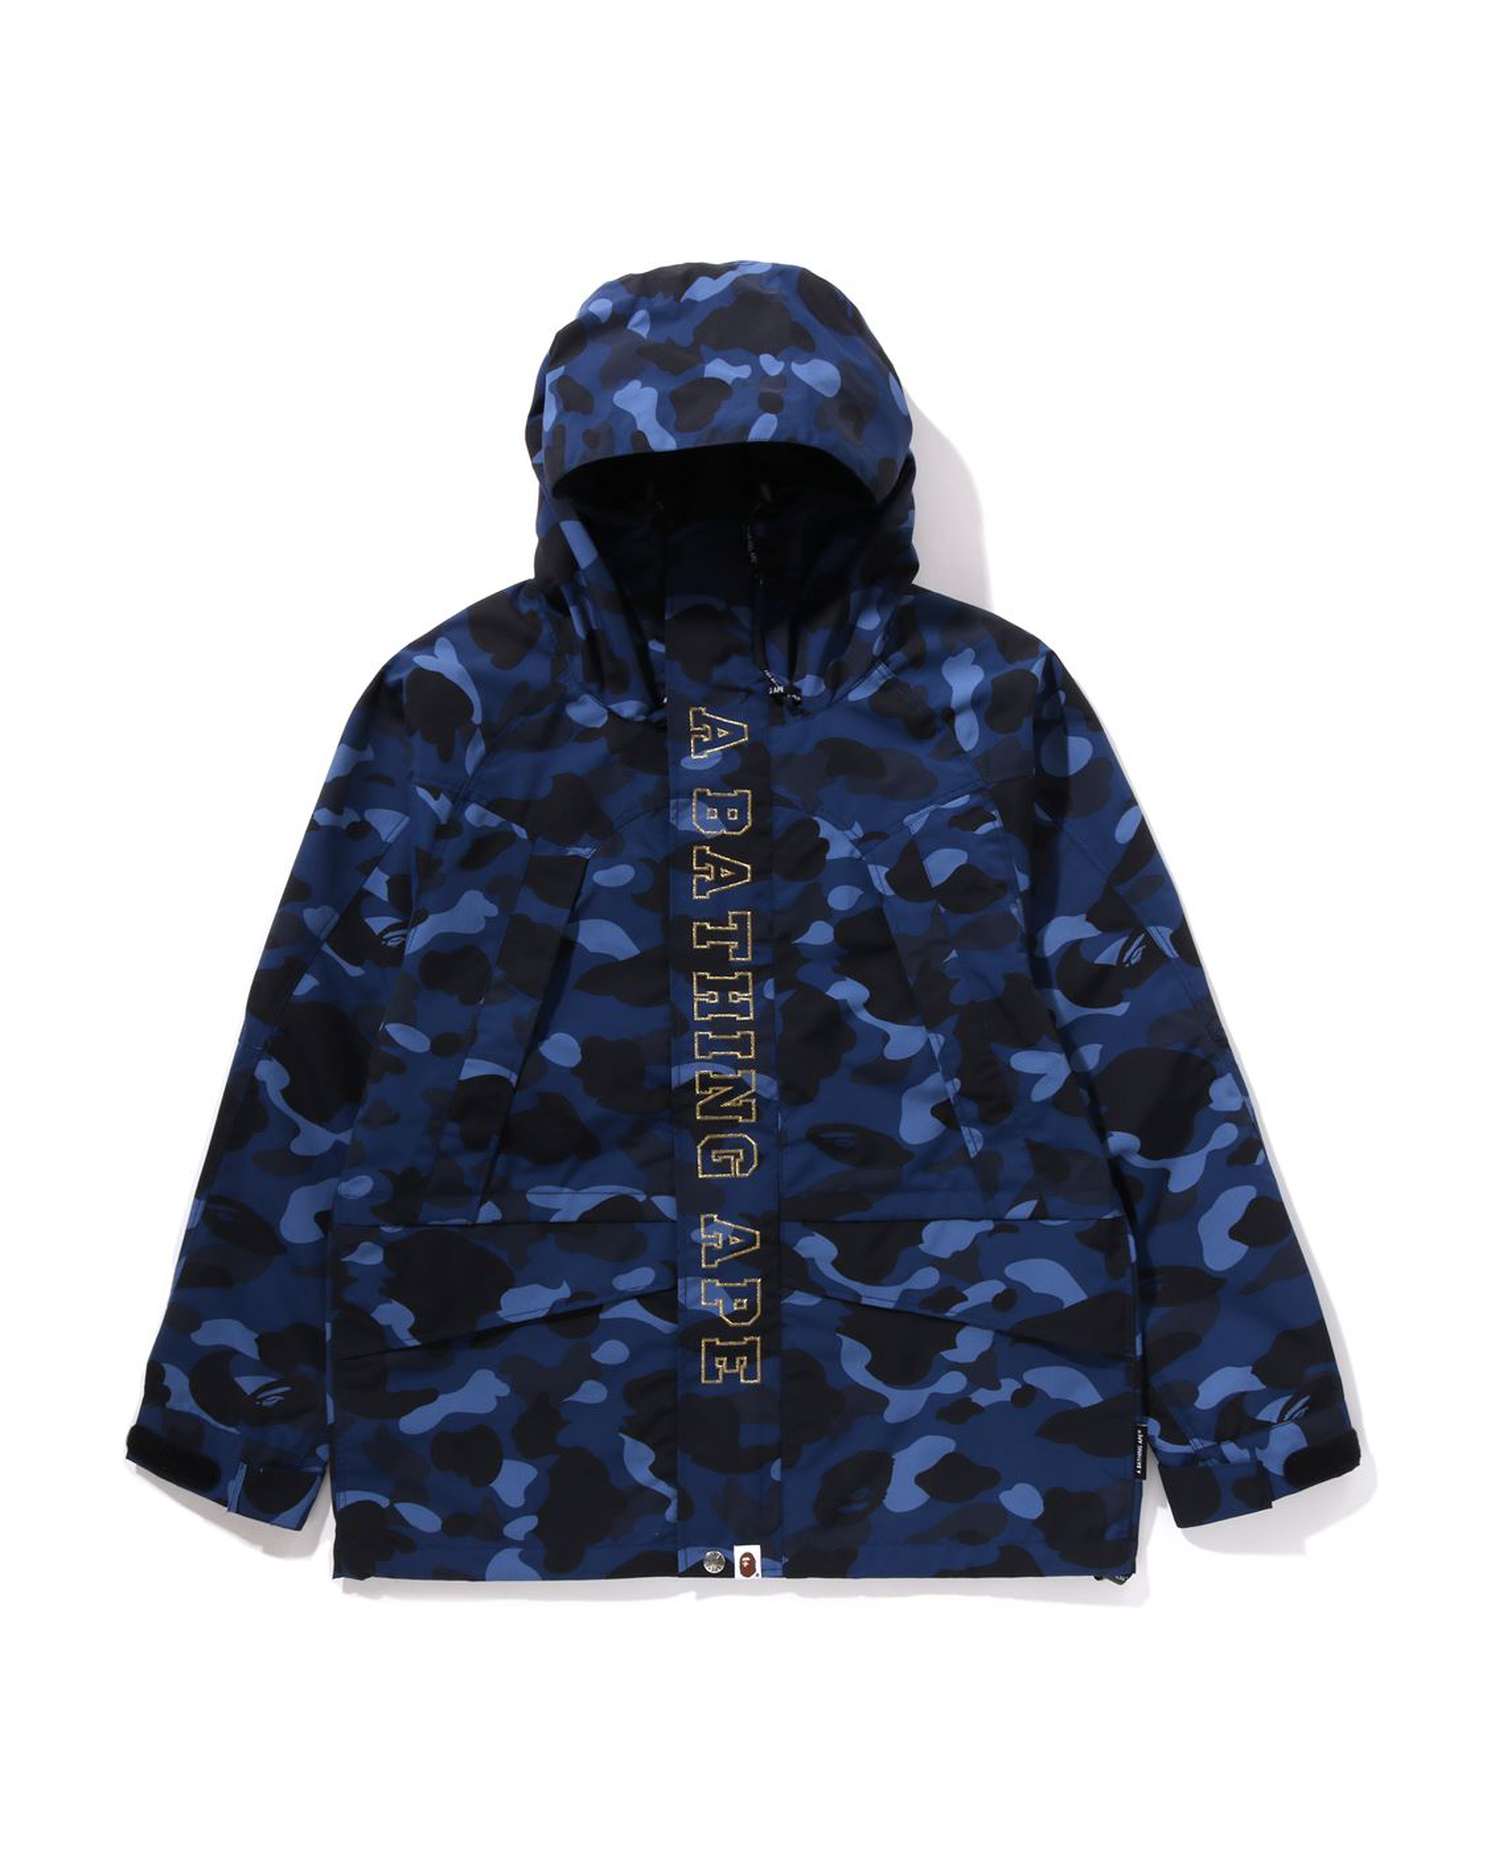 Shop Color Camo Snowboard Jacket Online | BAPE